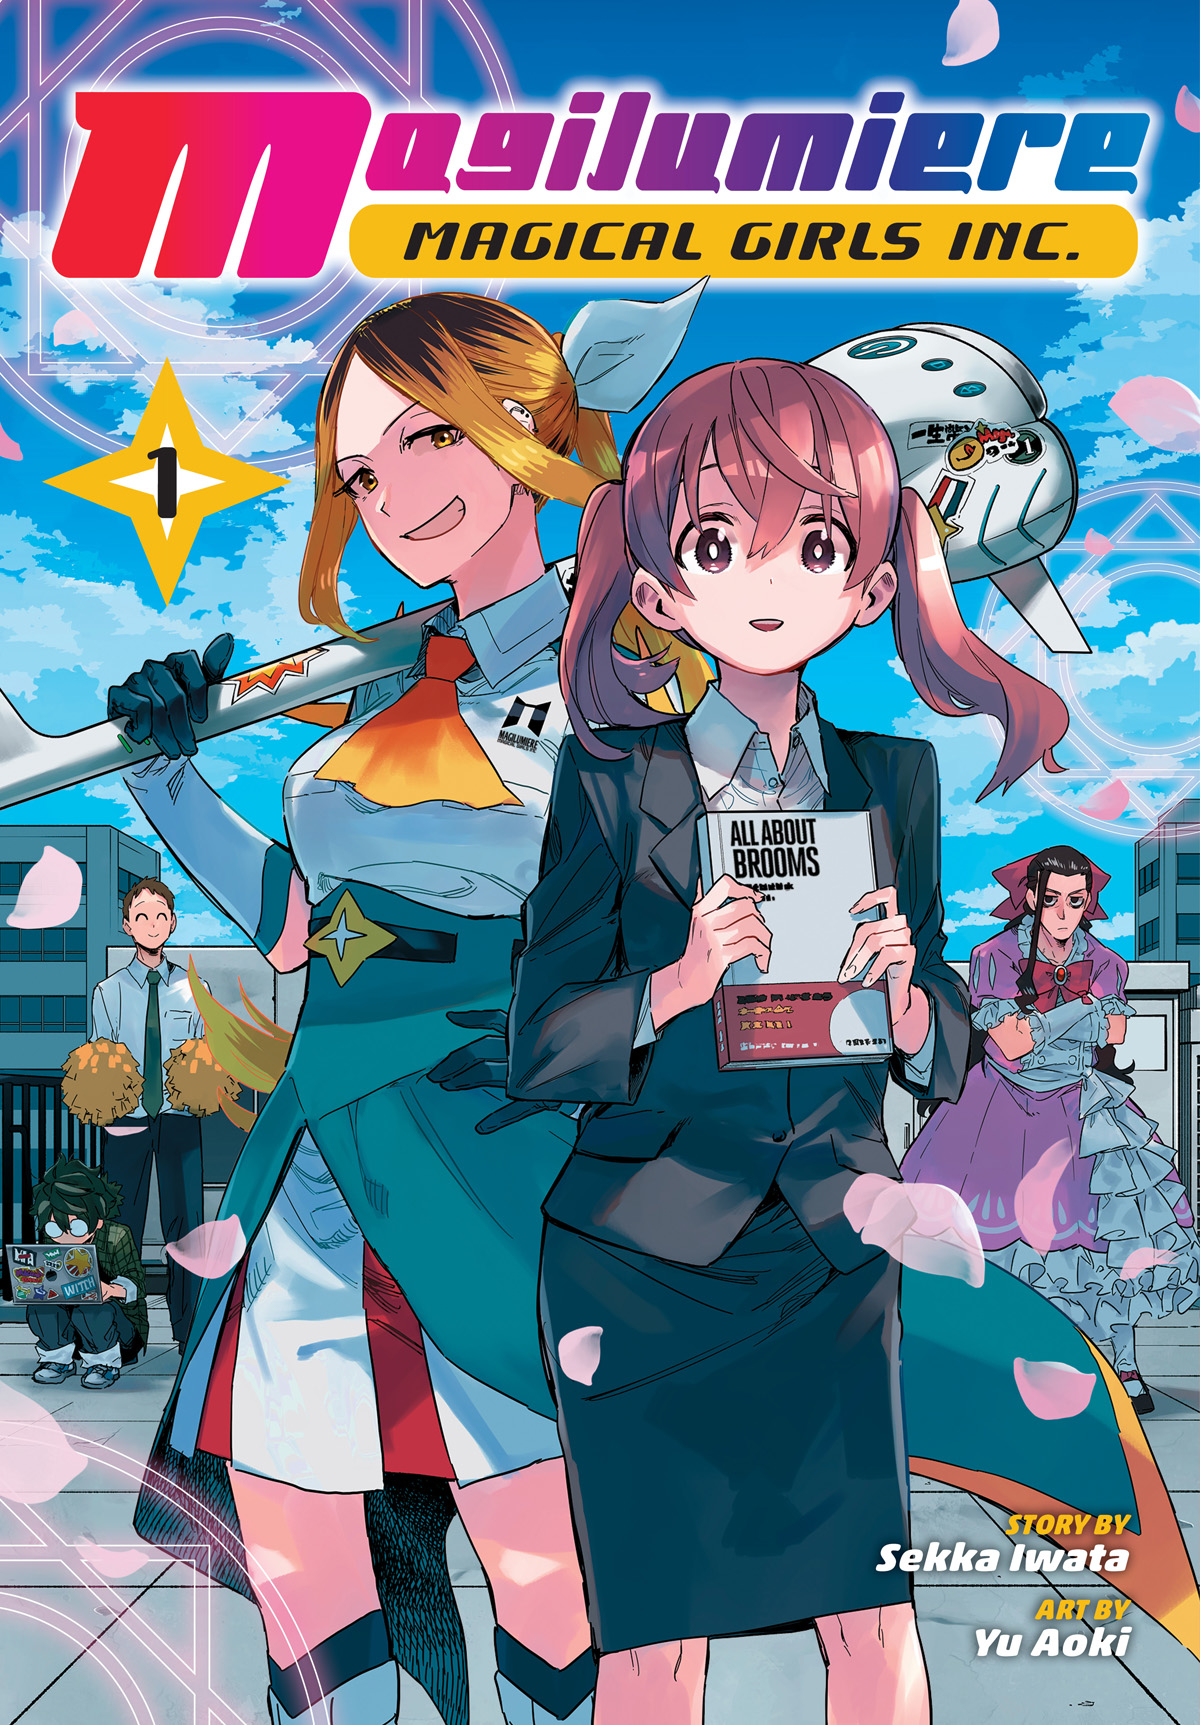 Magilumiere Magical Girls Inc Manga Volume 1